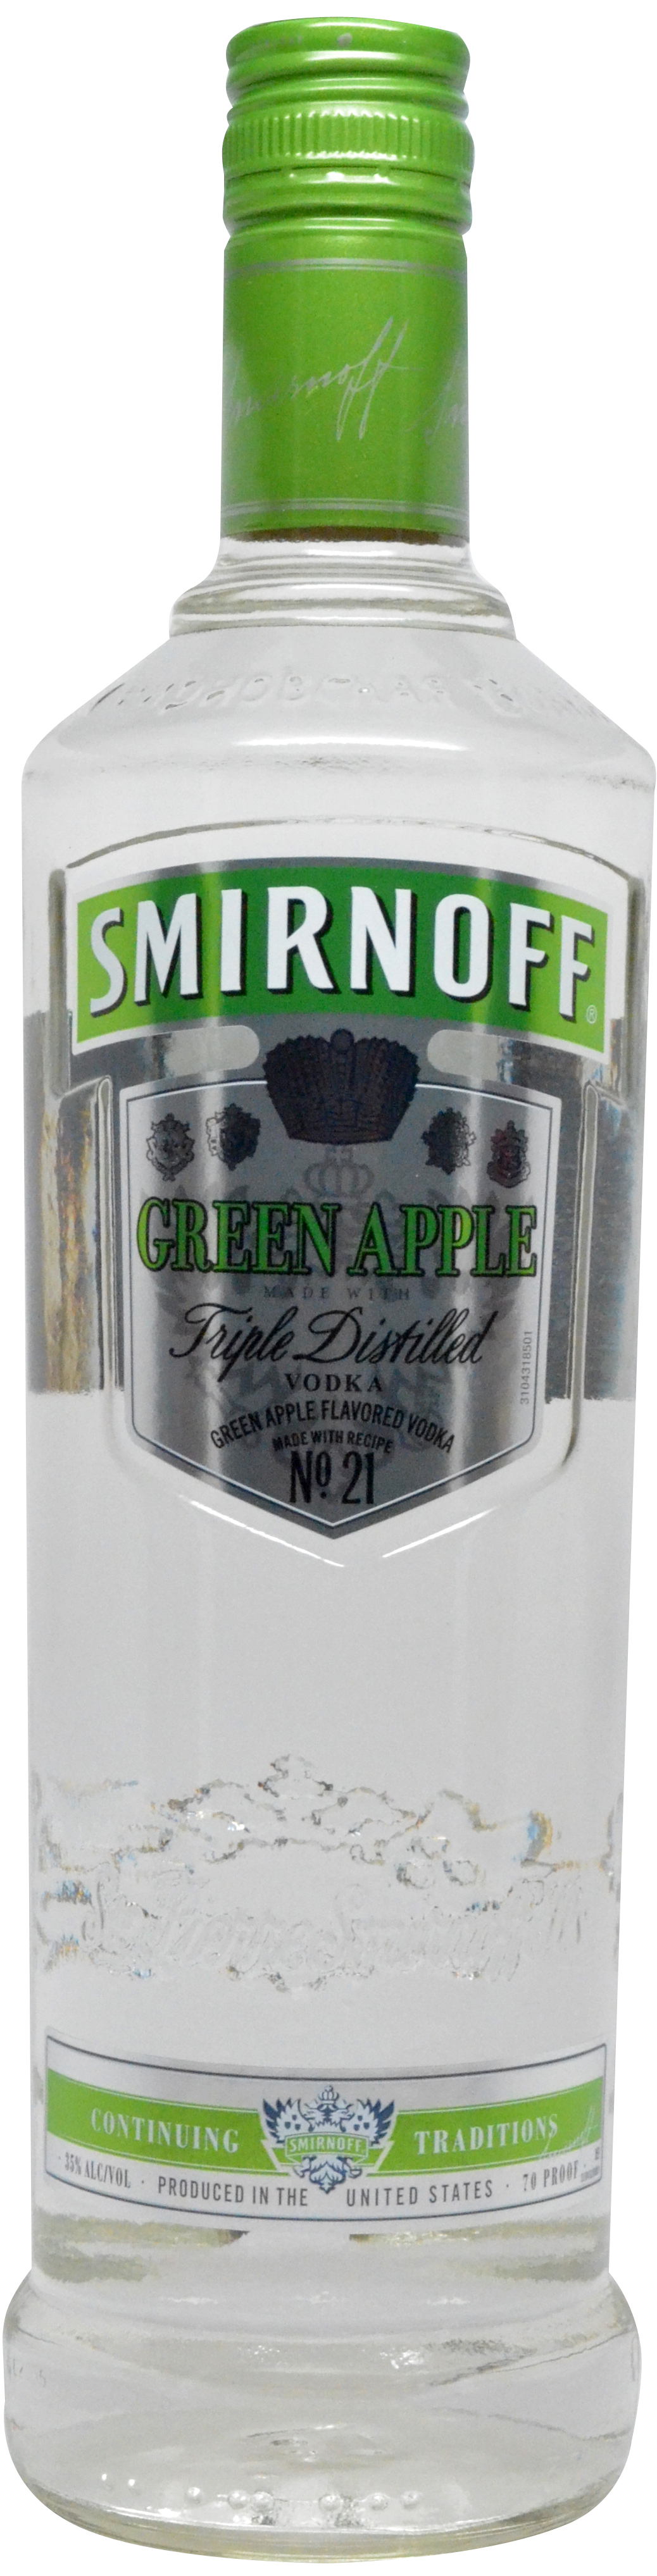 Smirnoff Sours Green Apple Vodka, 750 mL - Kroger